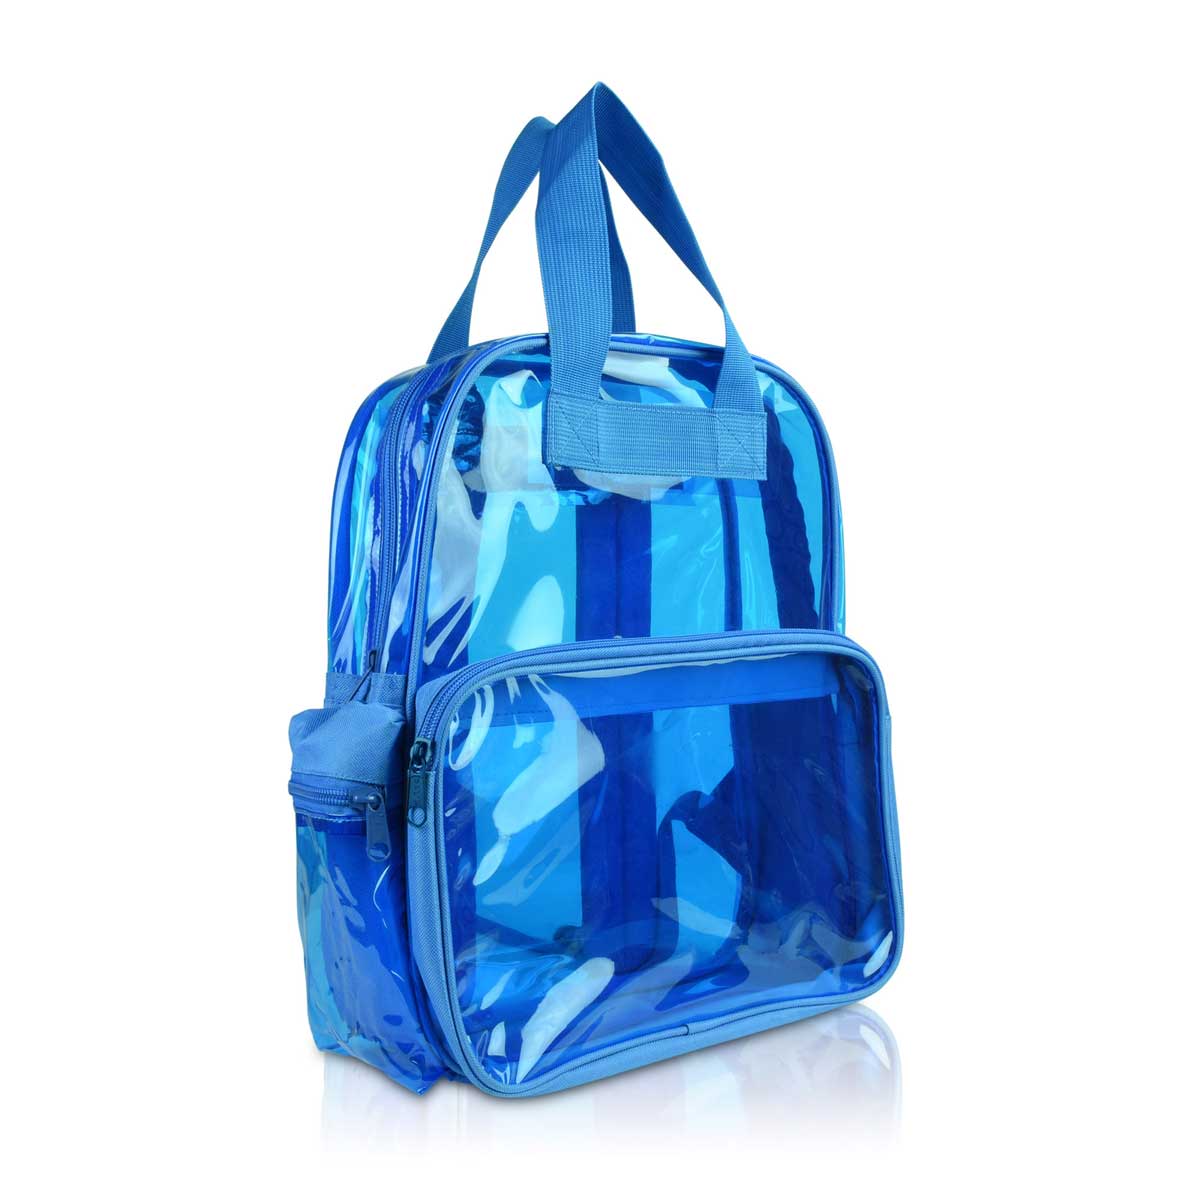 DALIX Small Neon Clear Backpacks | Dalix.com